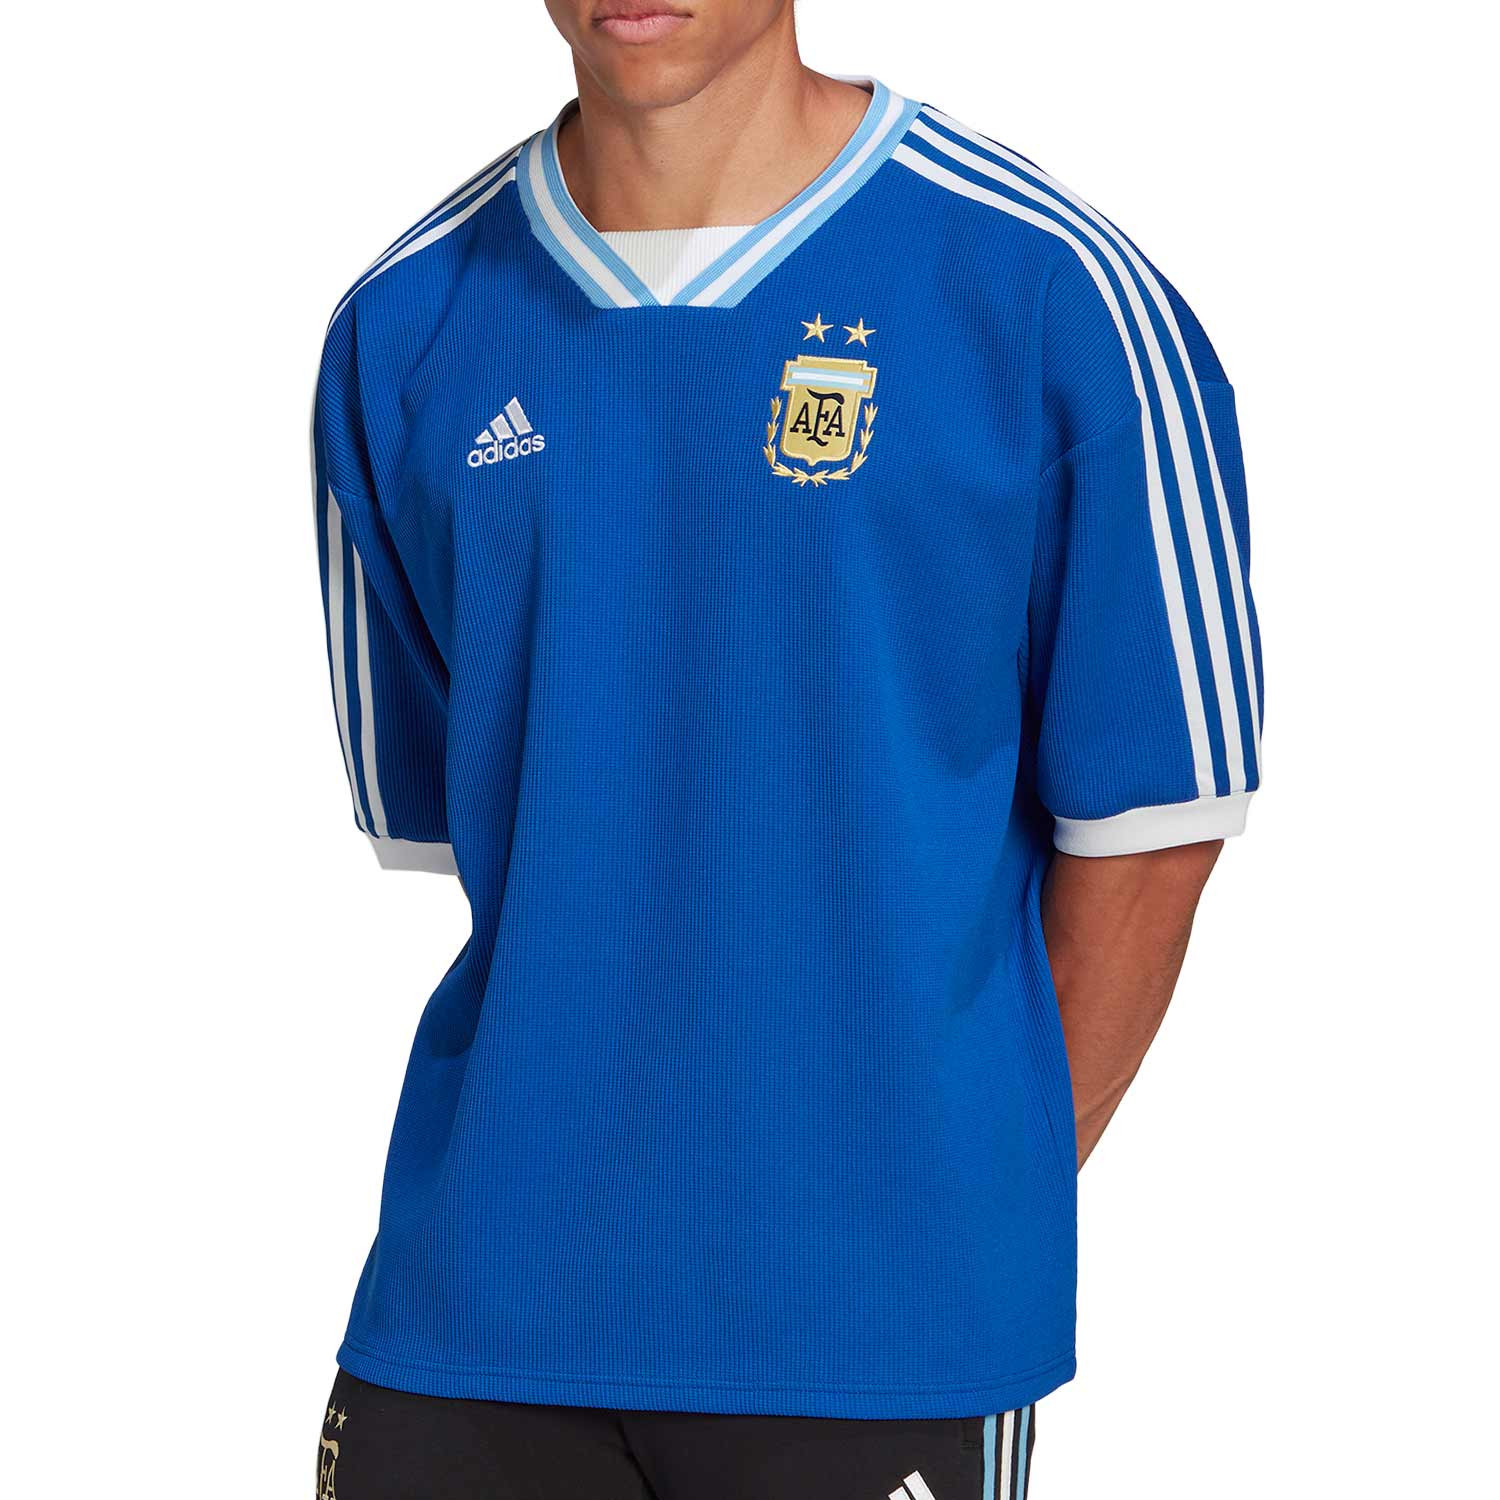 Incesante Señal prima Camiseta adidas Argentina Icon azul | futbolmania